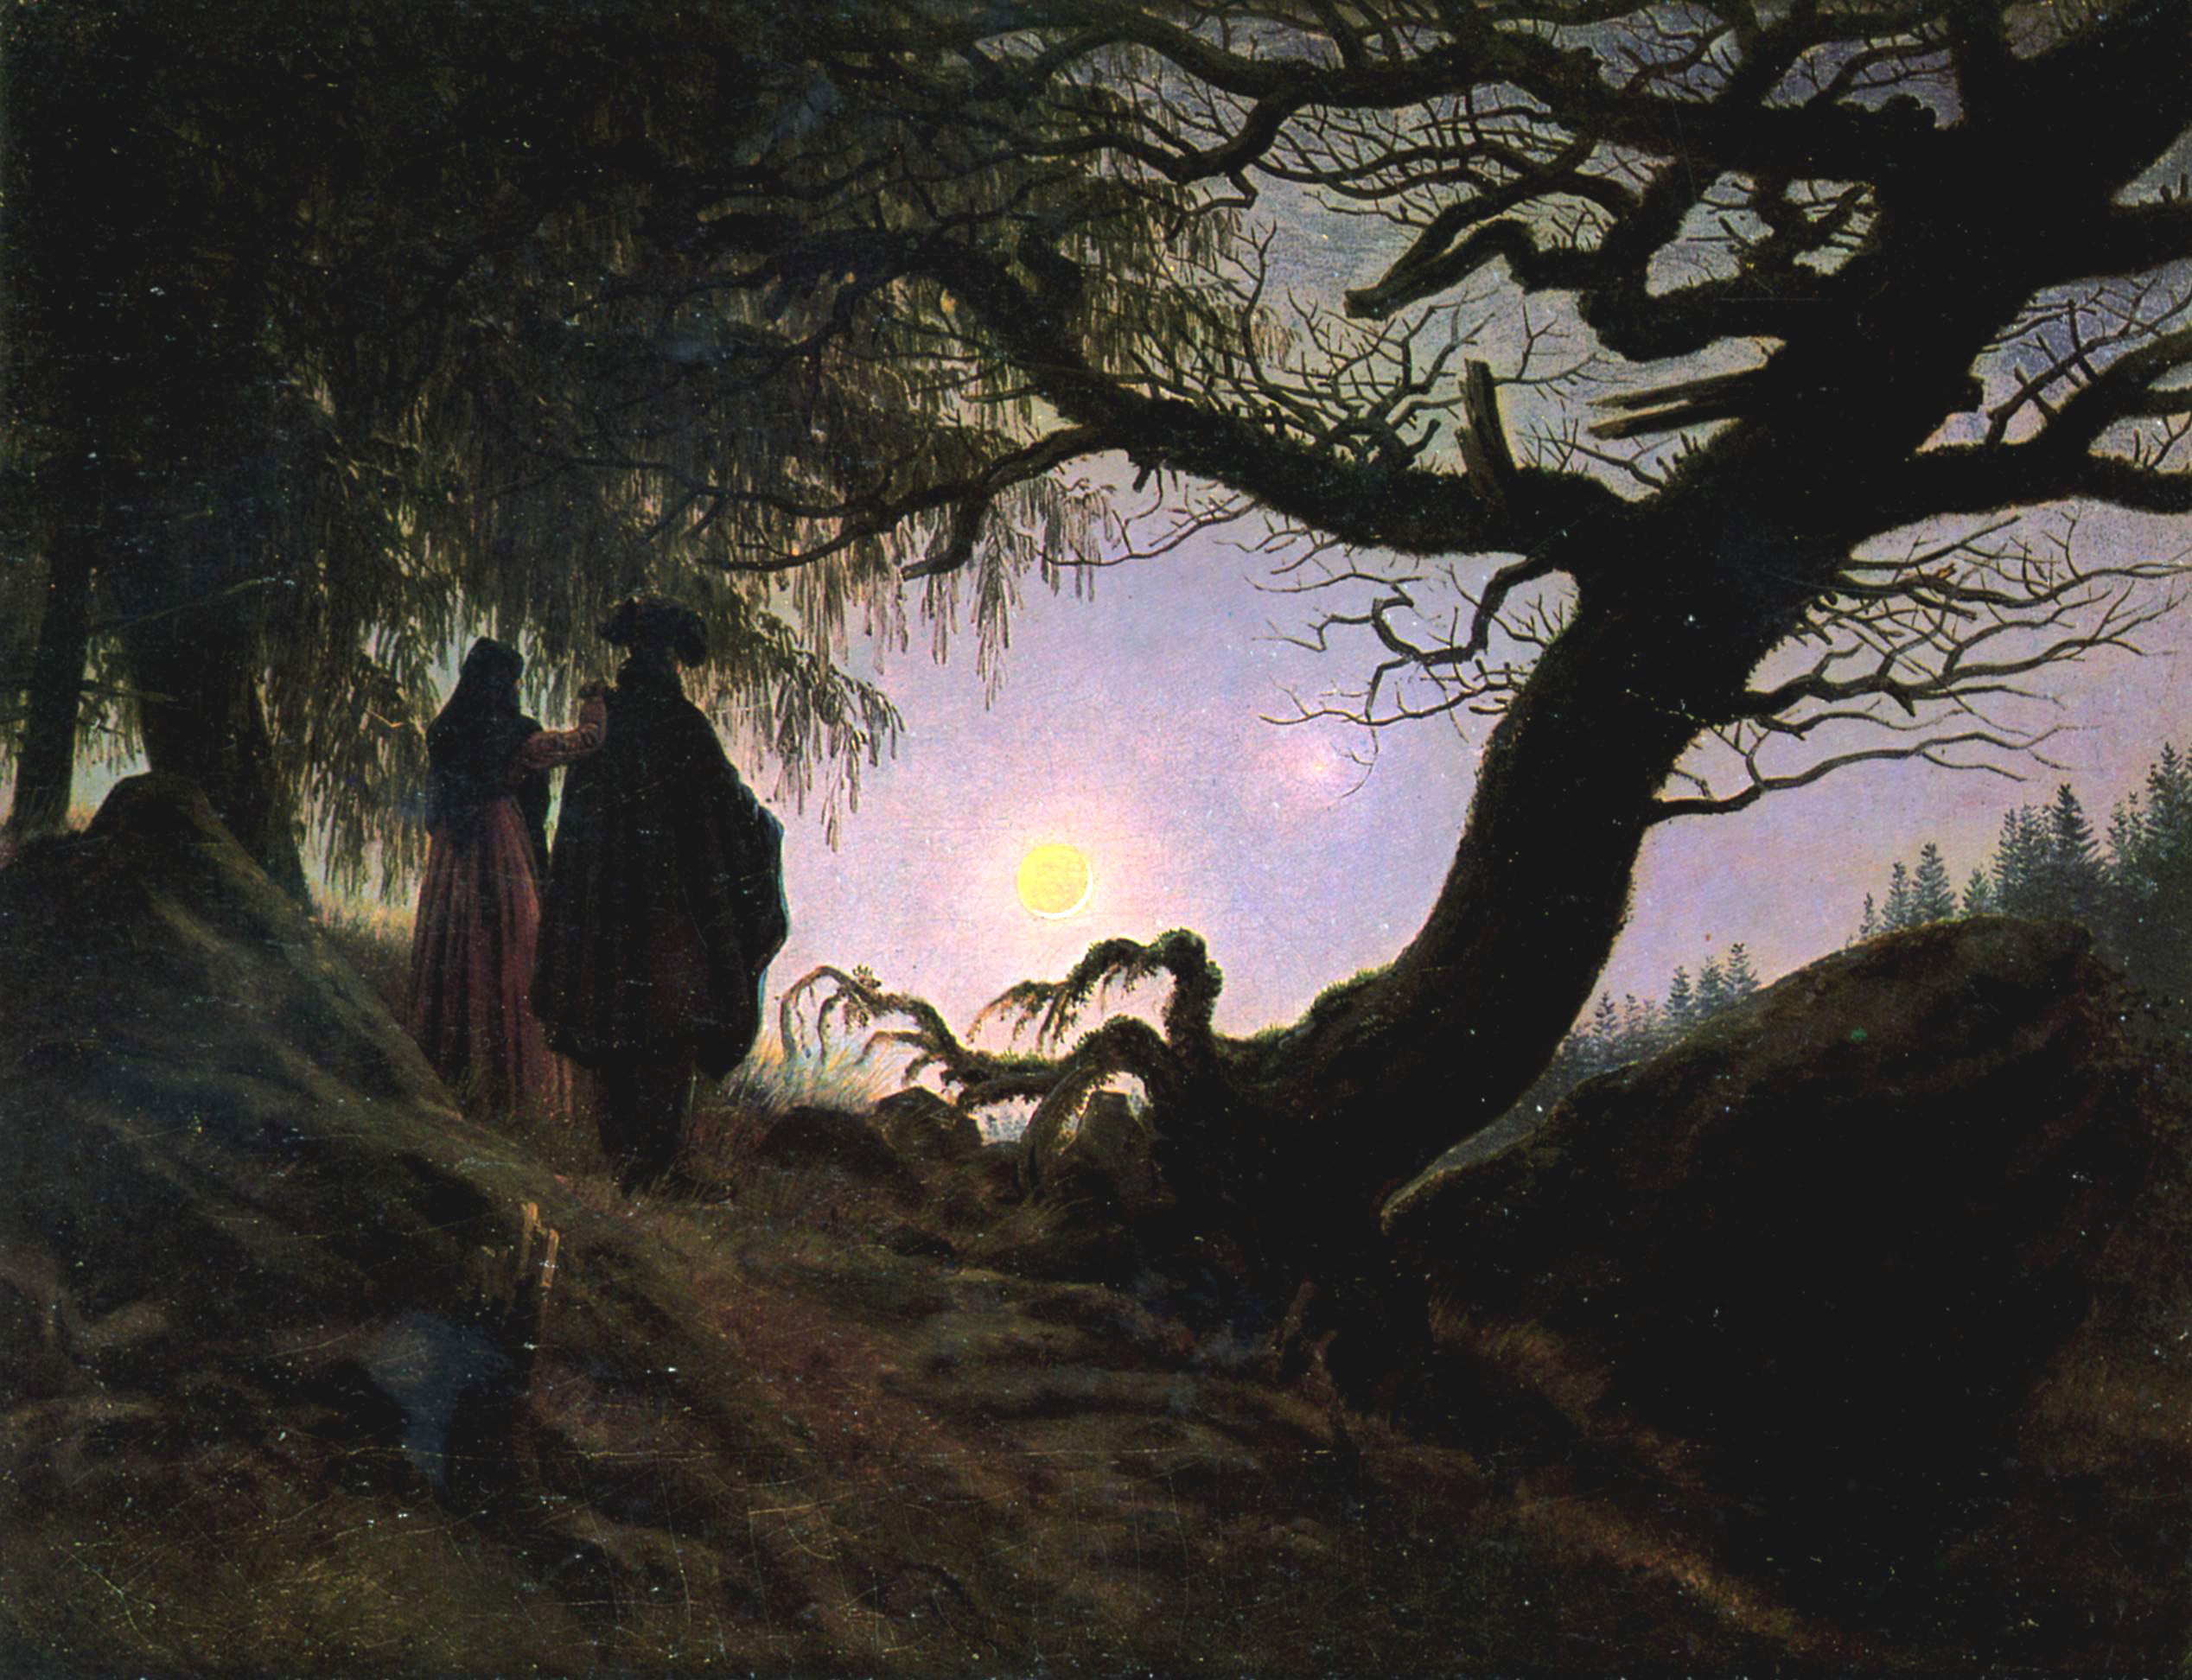 Caspar David Friedrich, “Man and Woman Contemplating the Moon," 1835 (Alte Nationalgalerie, Berlin).